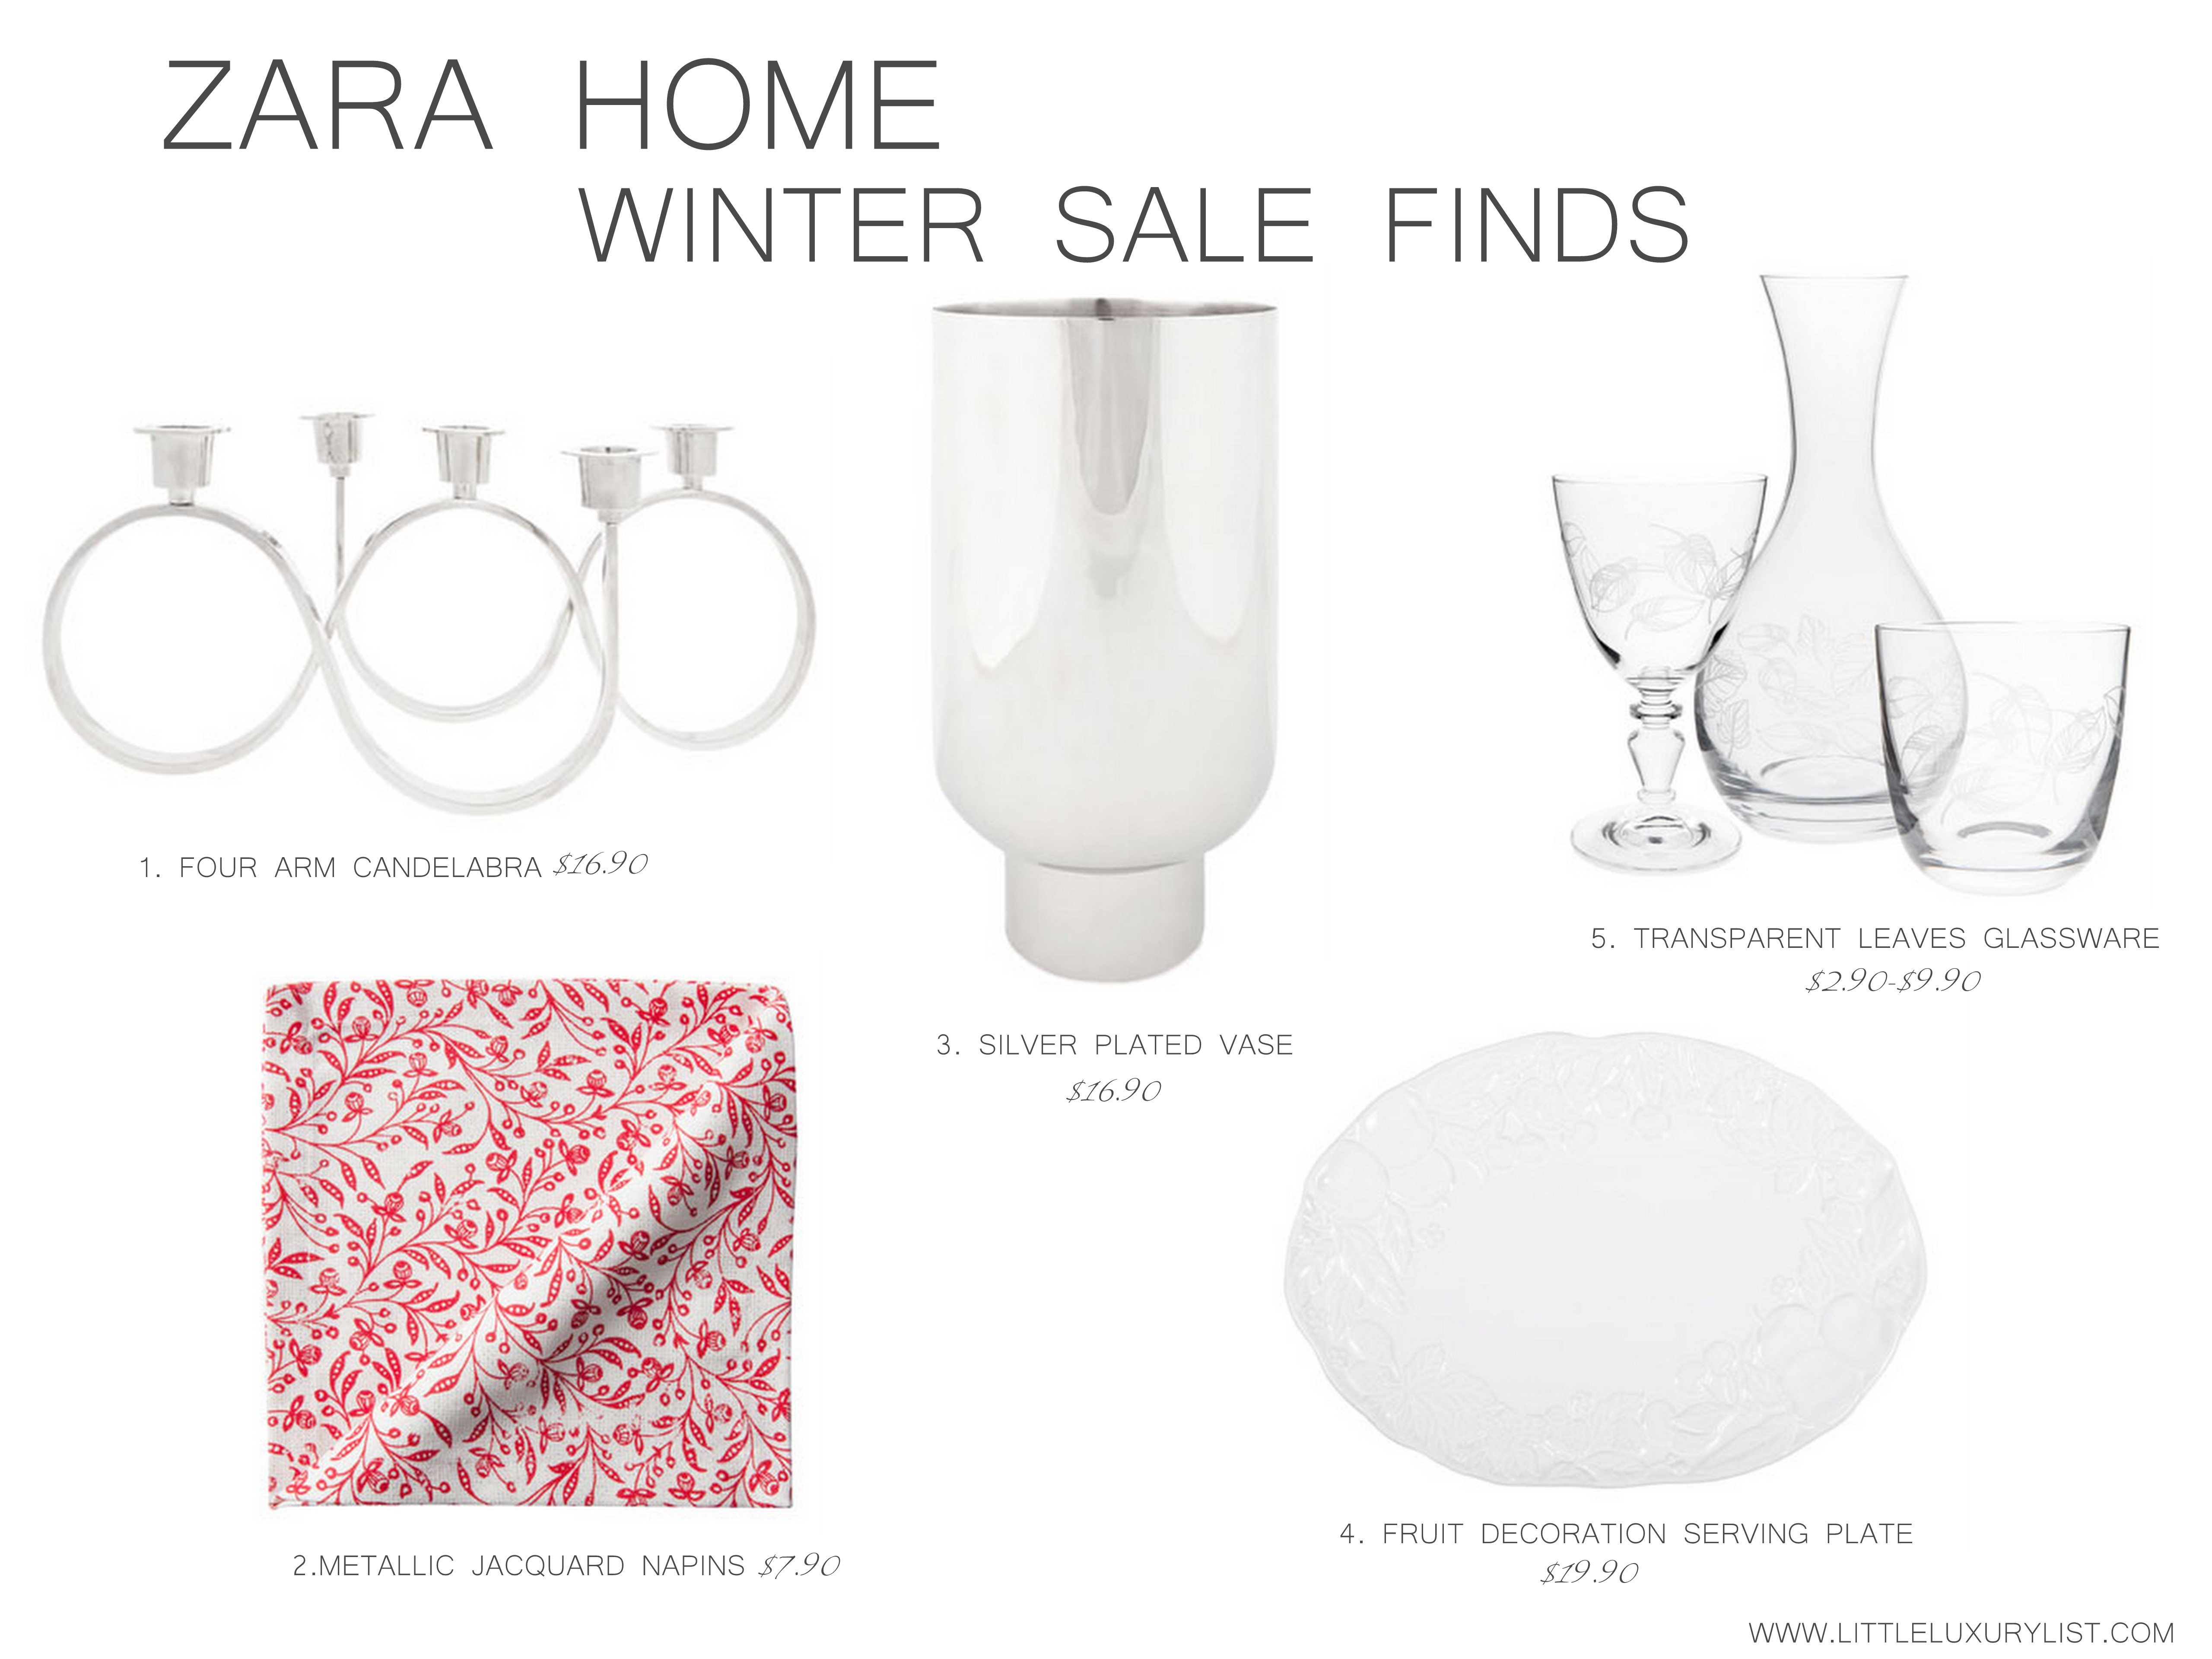 ZARA Home winter sale finds